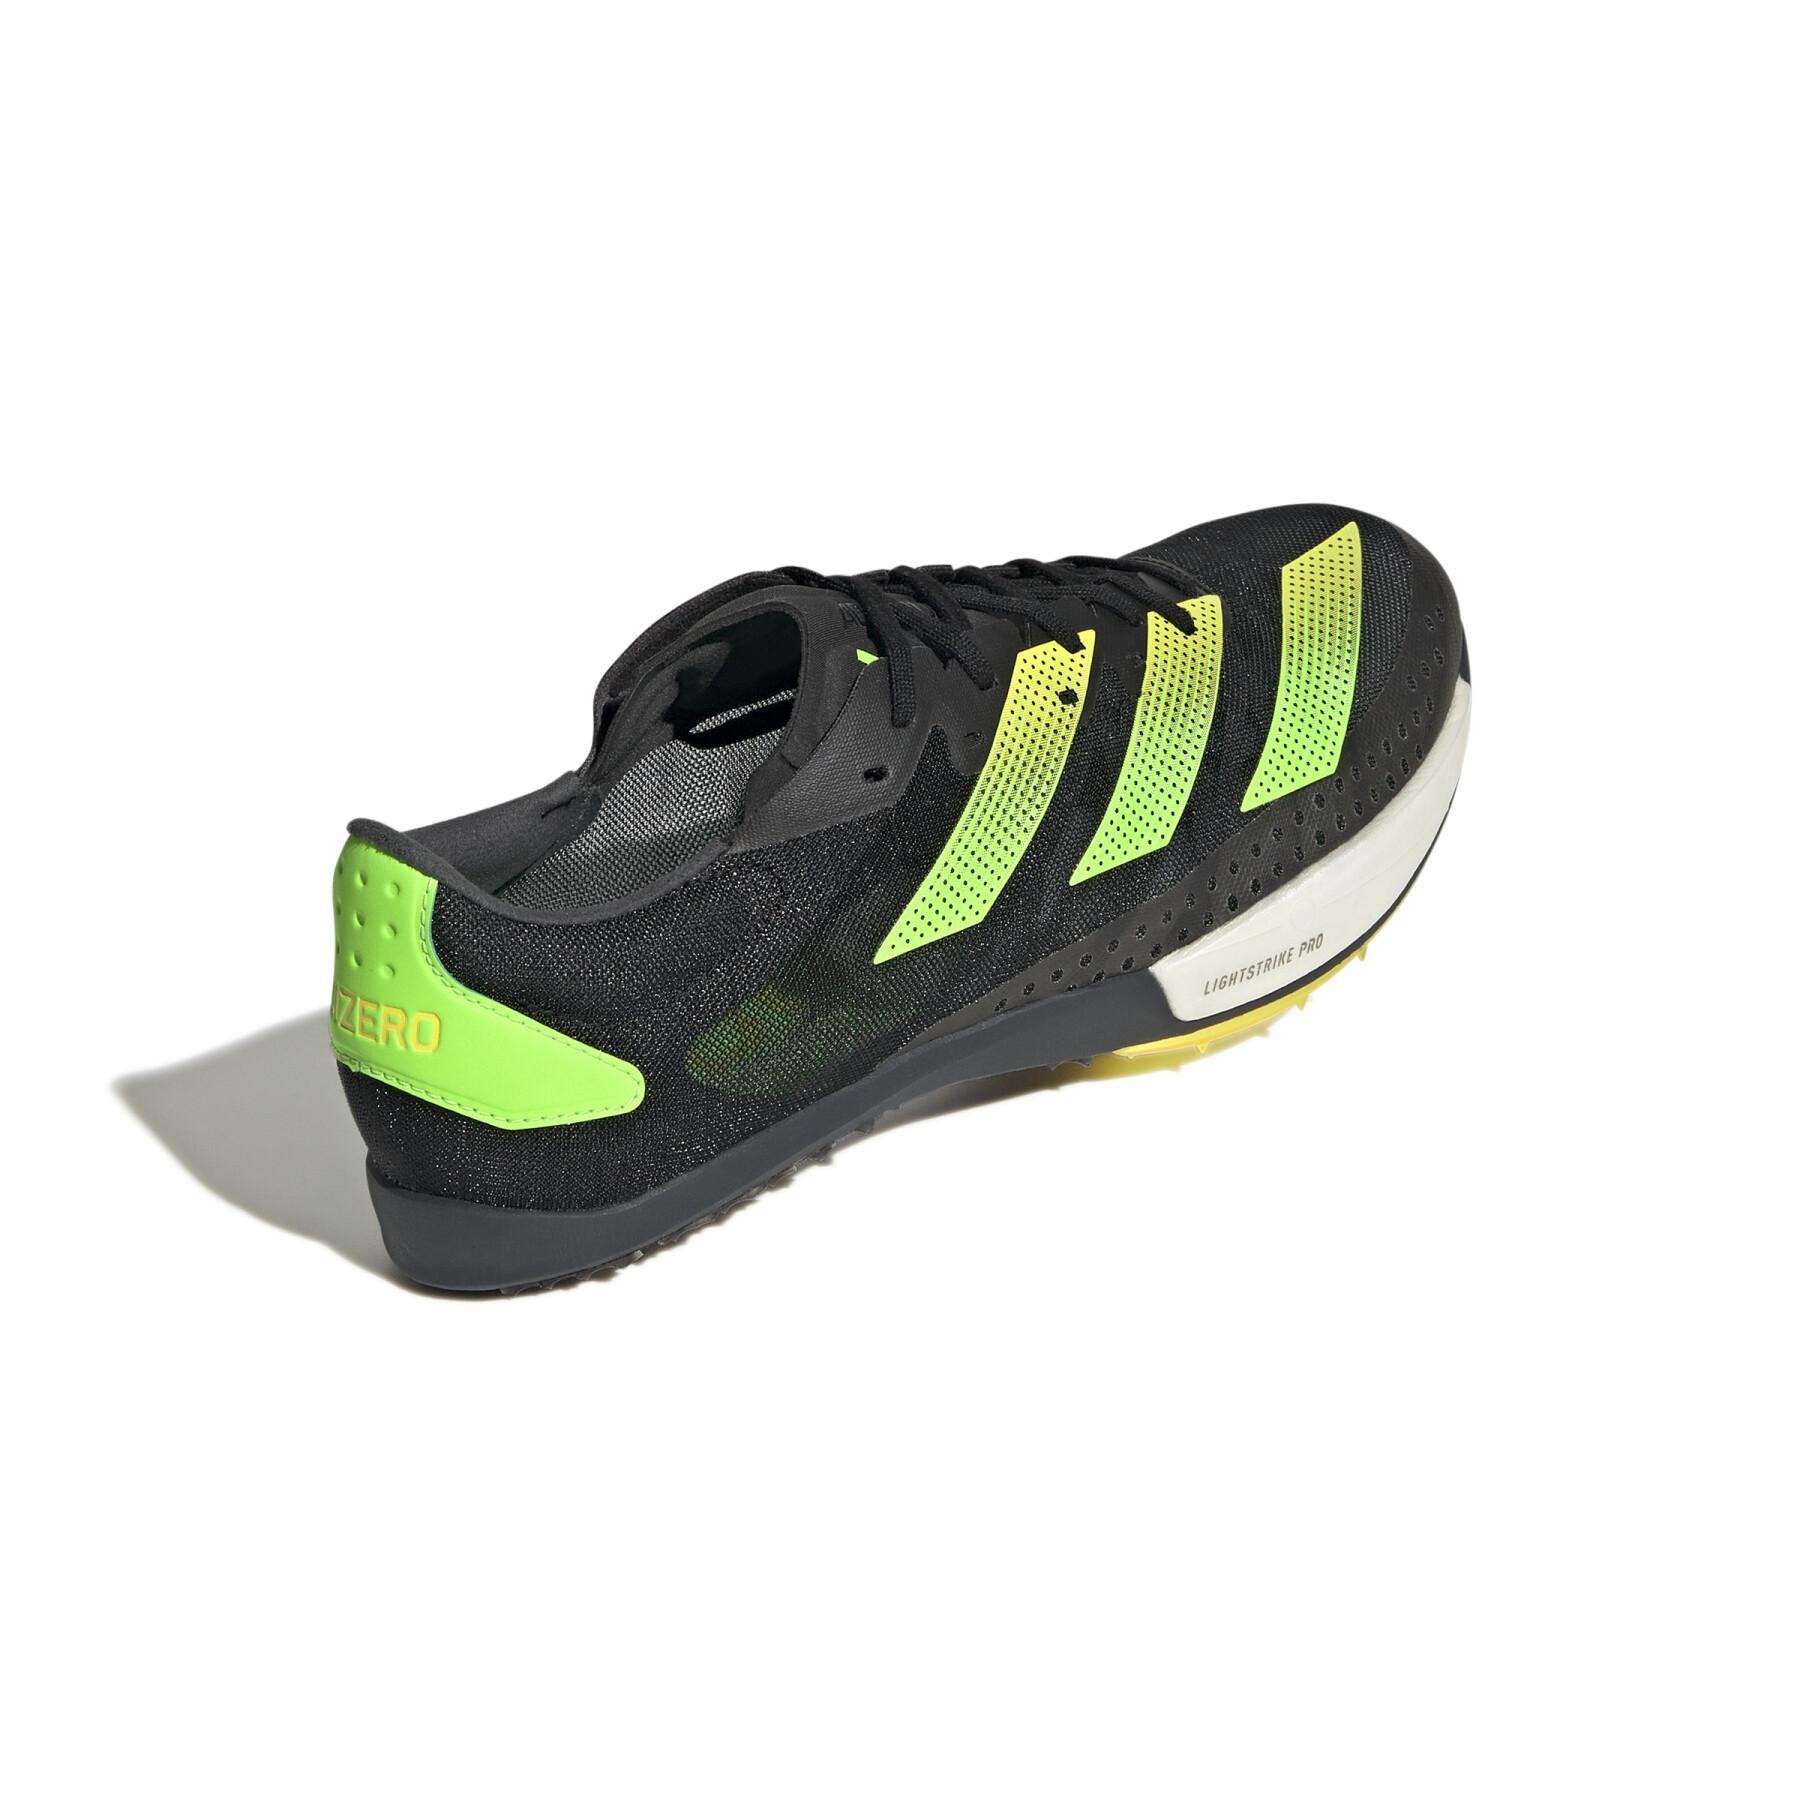 Chaussures d'athlétisme adidas 120 Adizero Ambition